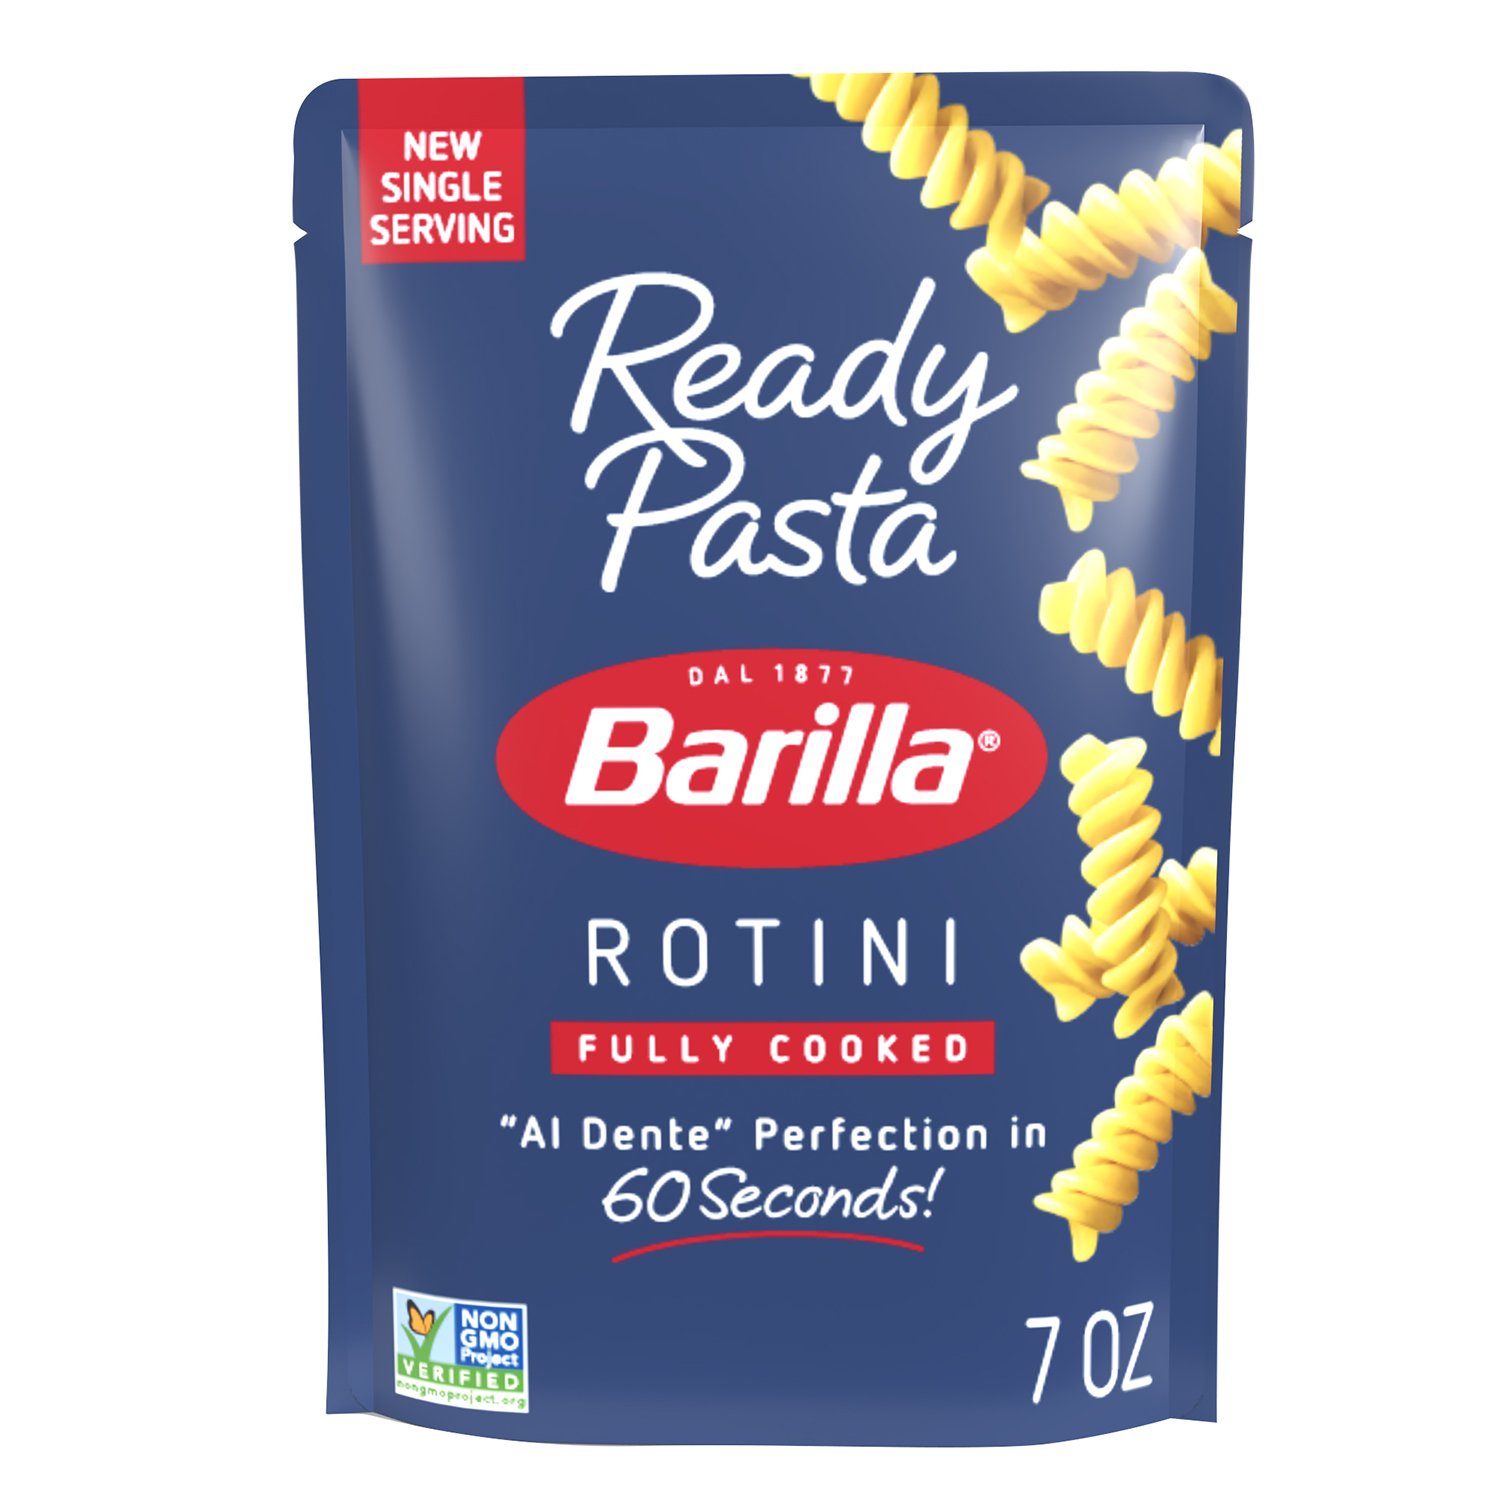 Barilla Ready Pasta Rotini - Shop Pasta at H-E-B